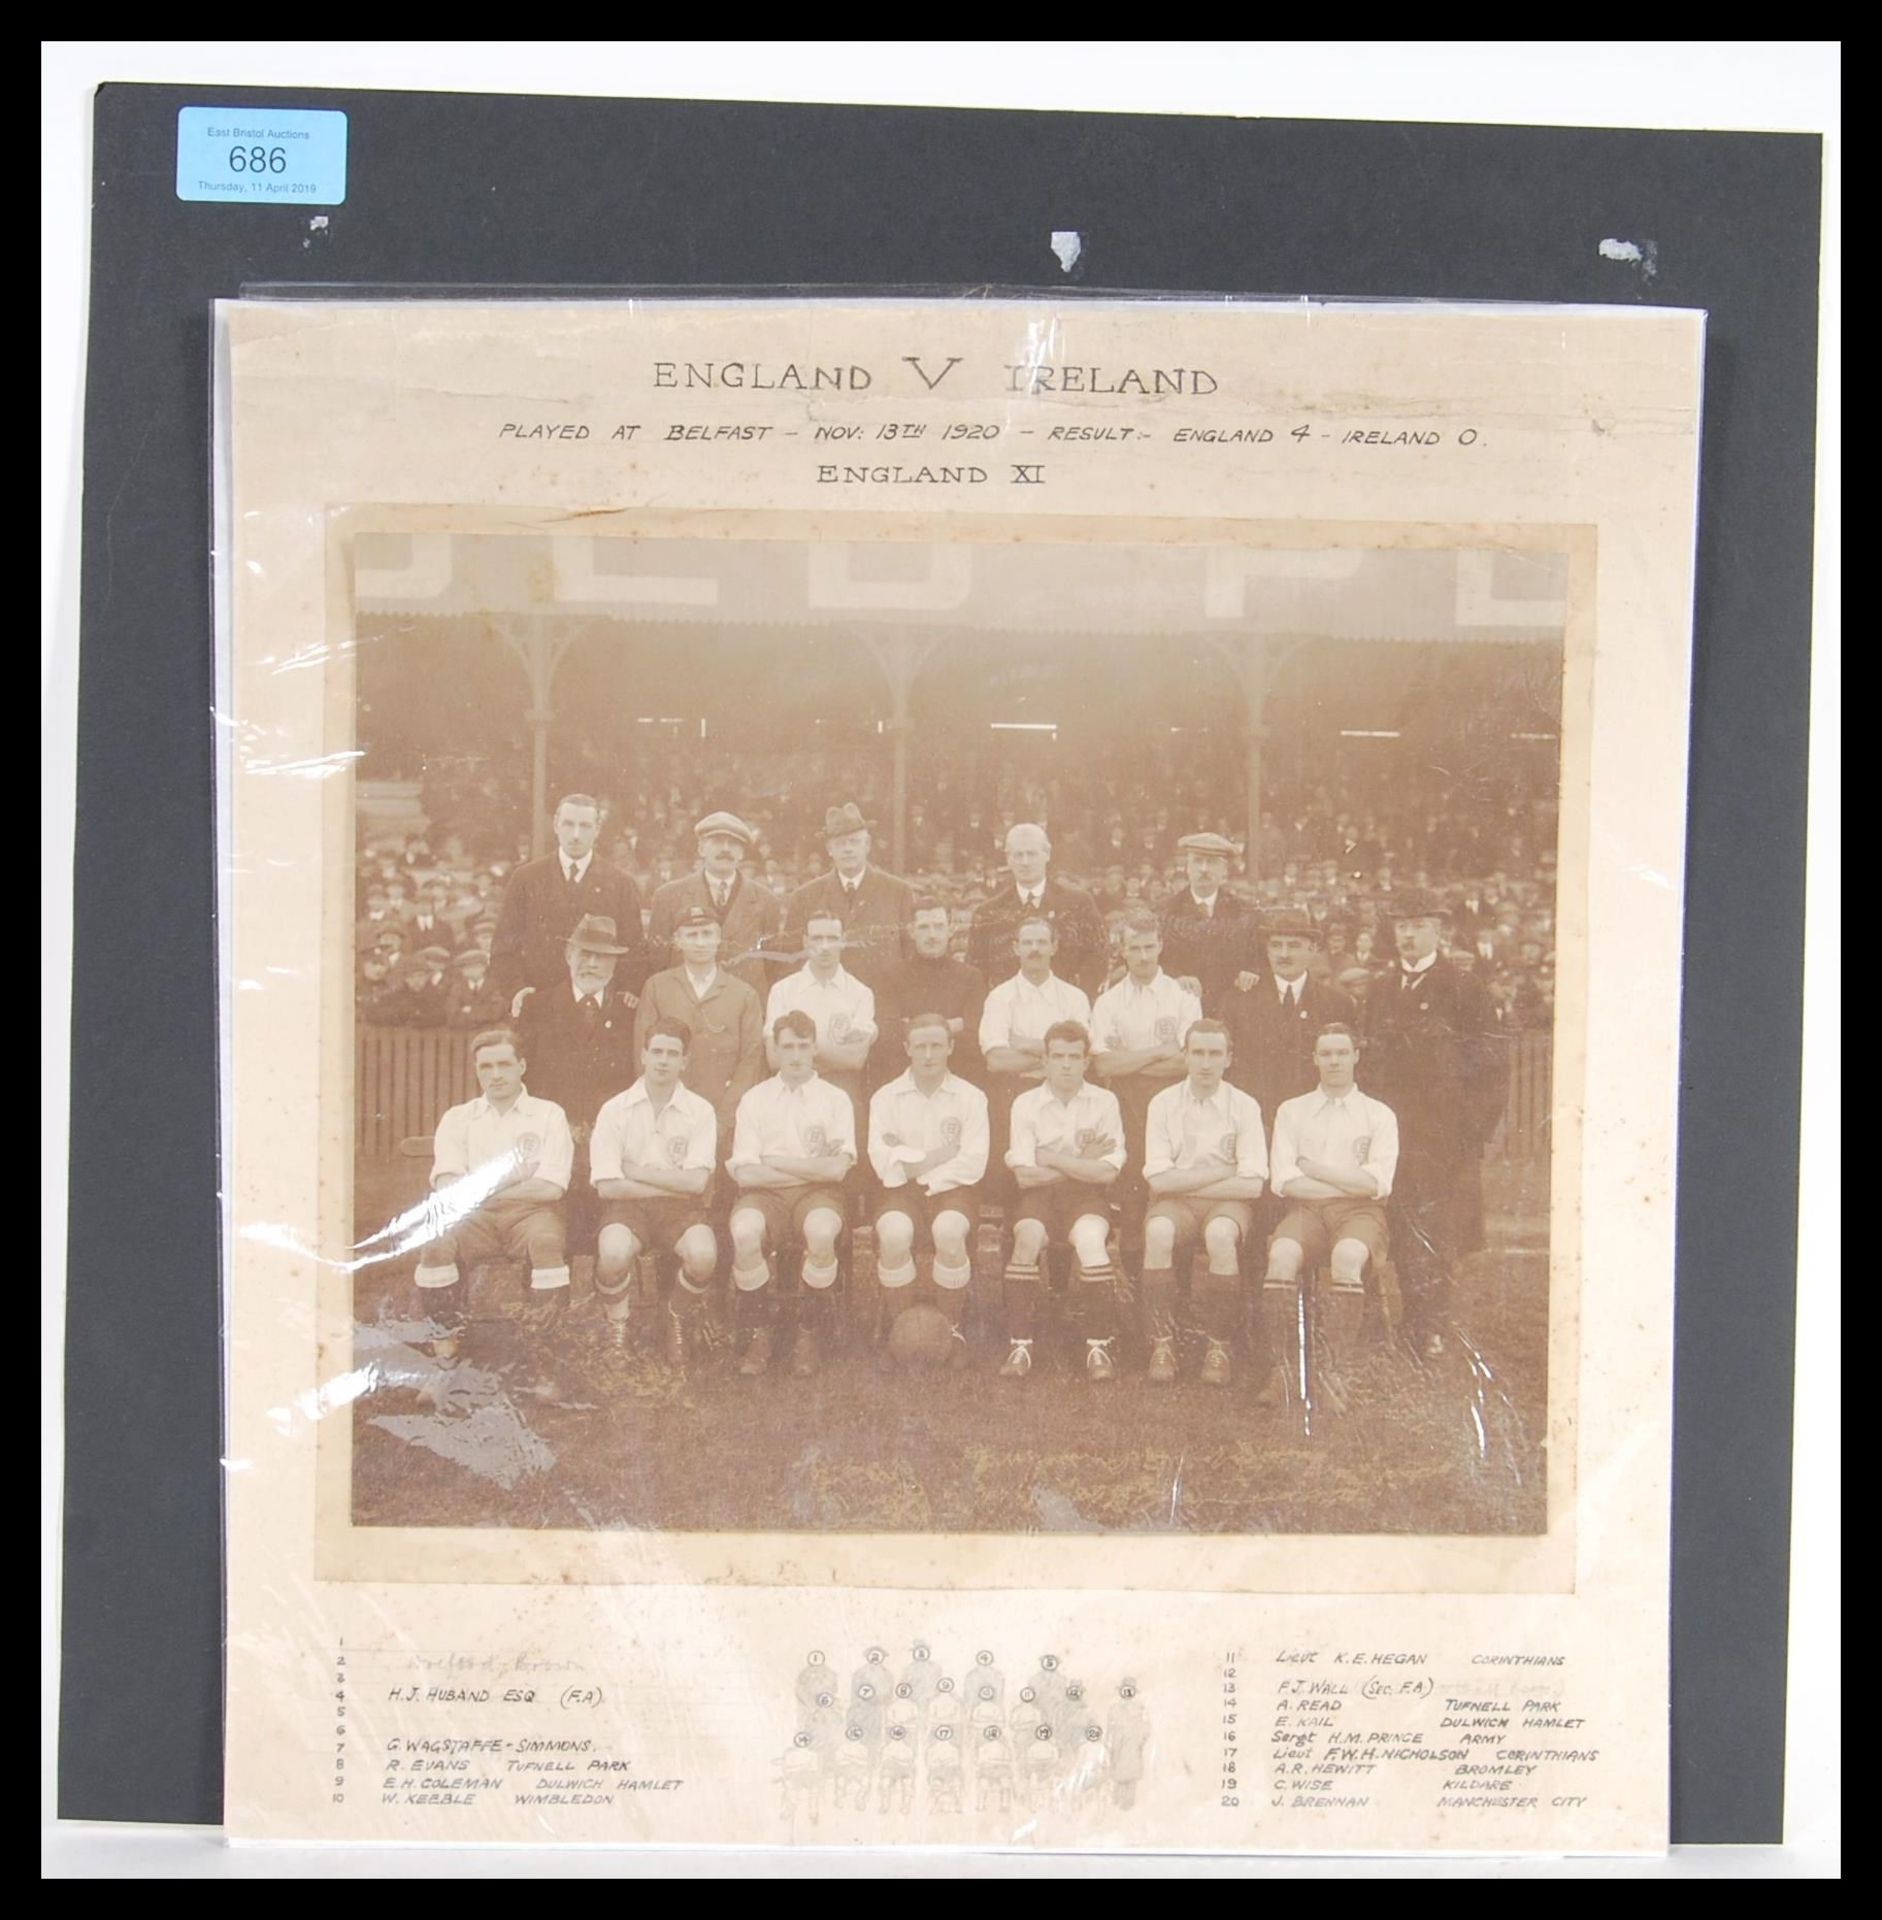 FOOTBALL photograph. 1920 Ireland v England played at Belfast. Large original sepia photo of the